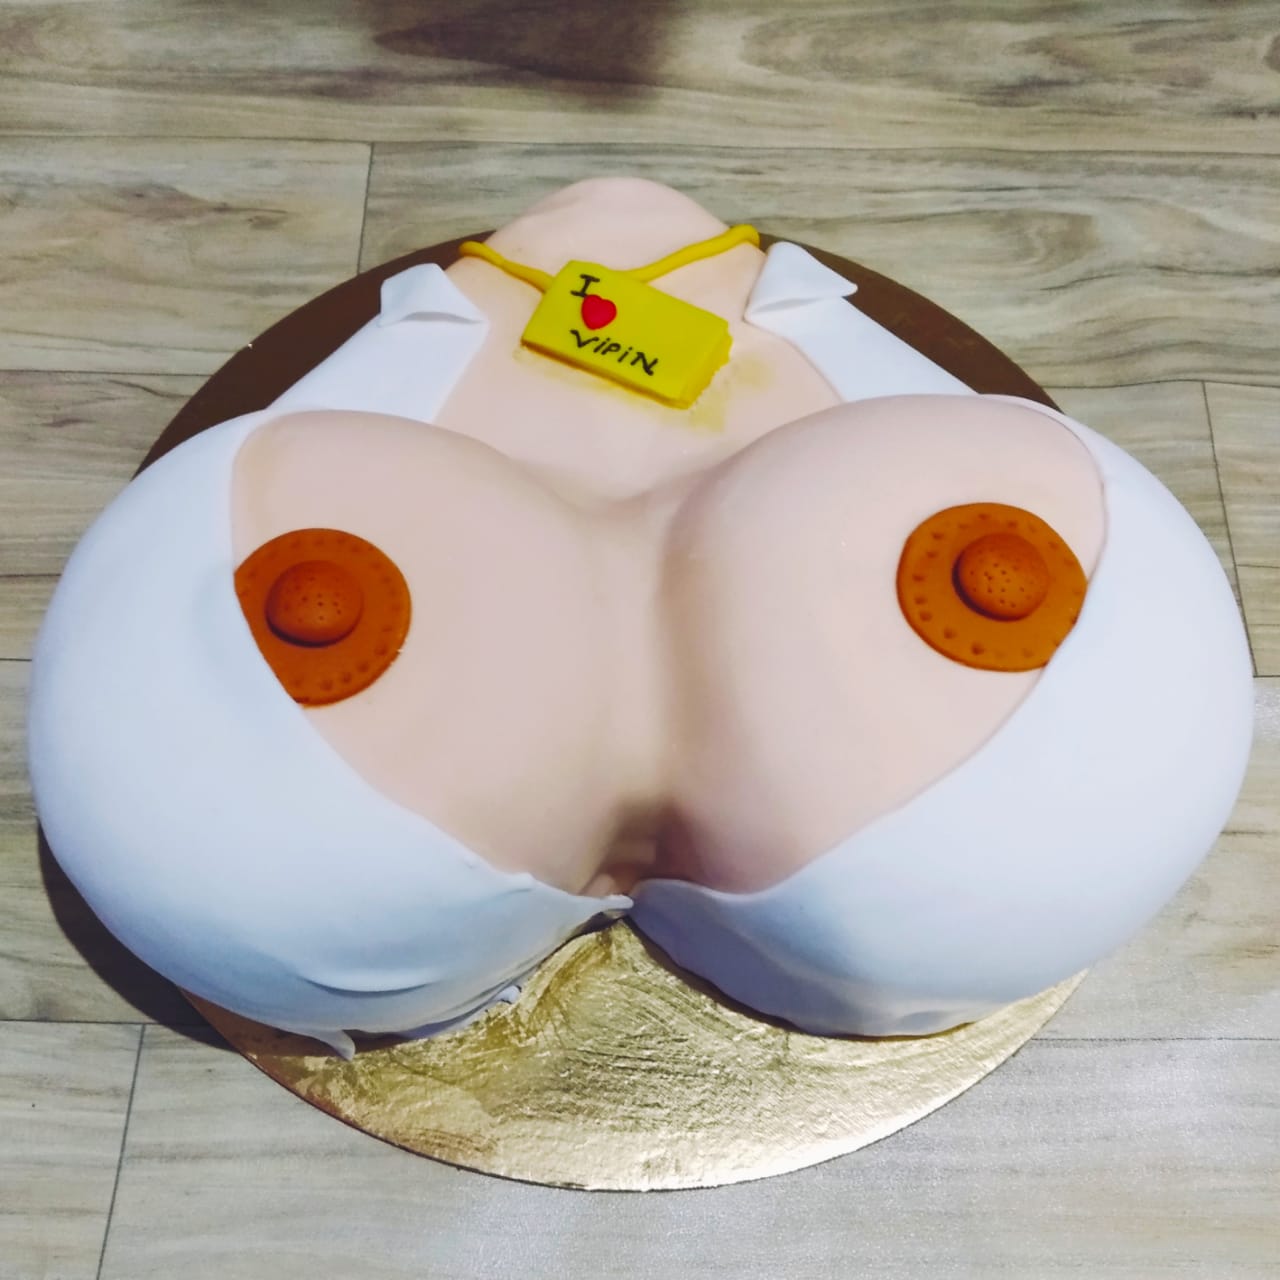 Bra and Boobs Theme Cakes Online Order in Delhi and NCR - Buy Erotic Adult  Cakes in Delhi and NCR : Fondant Cake Studio